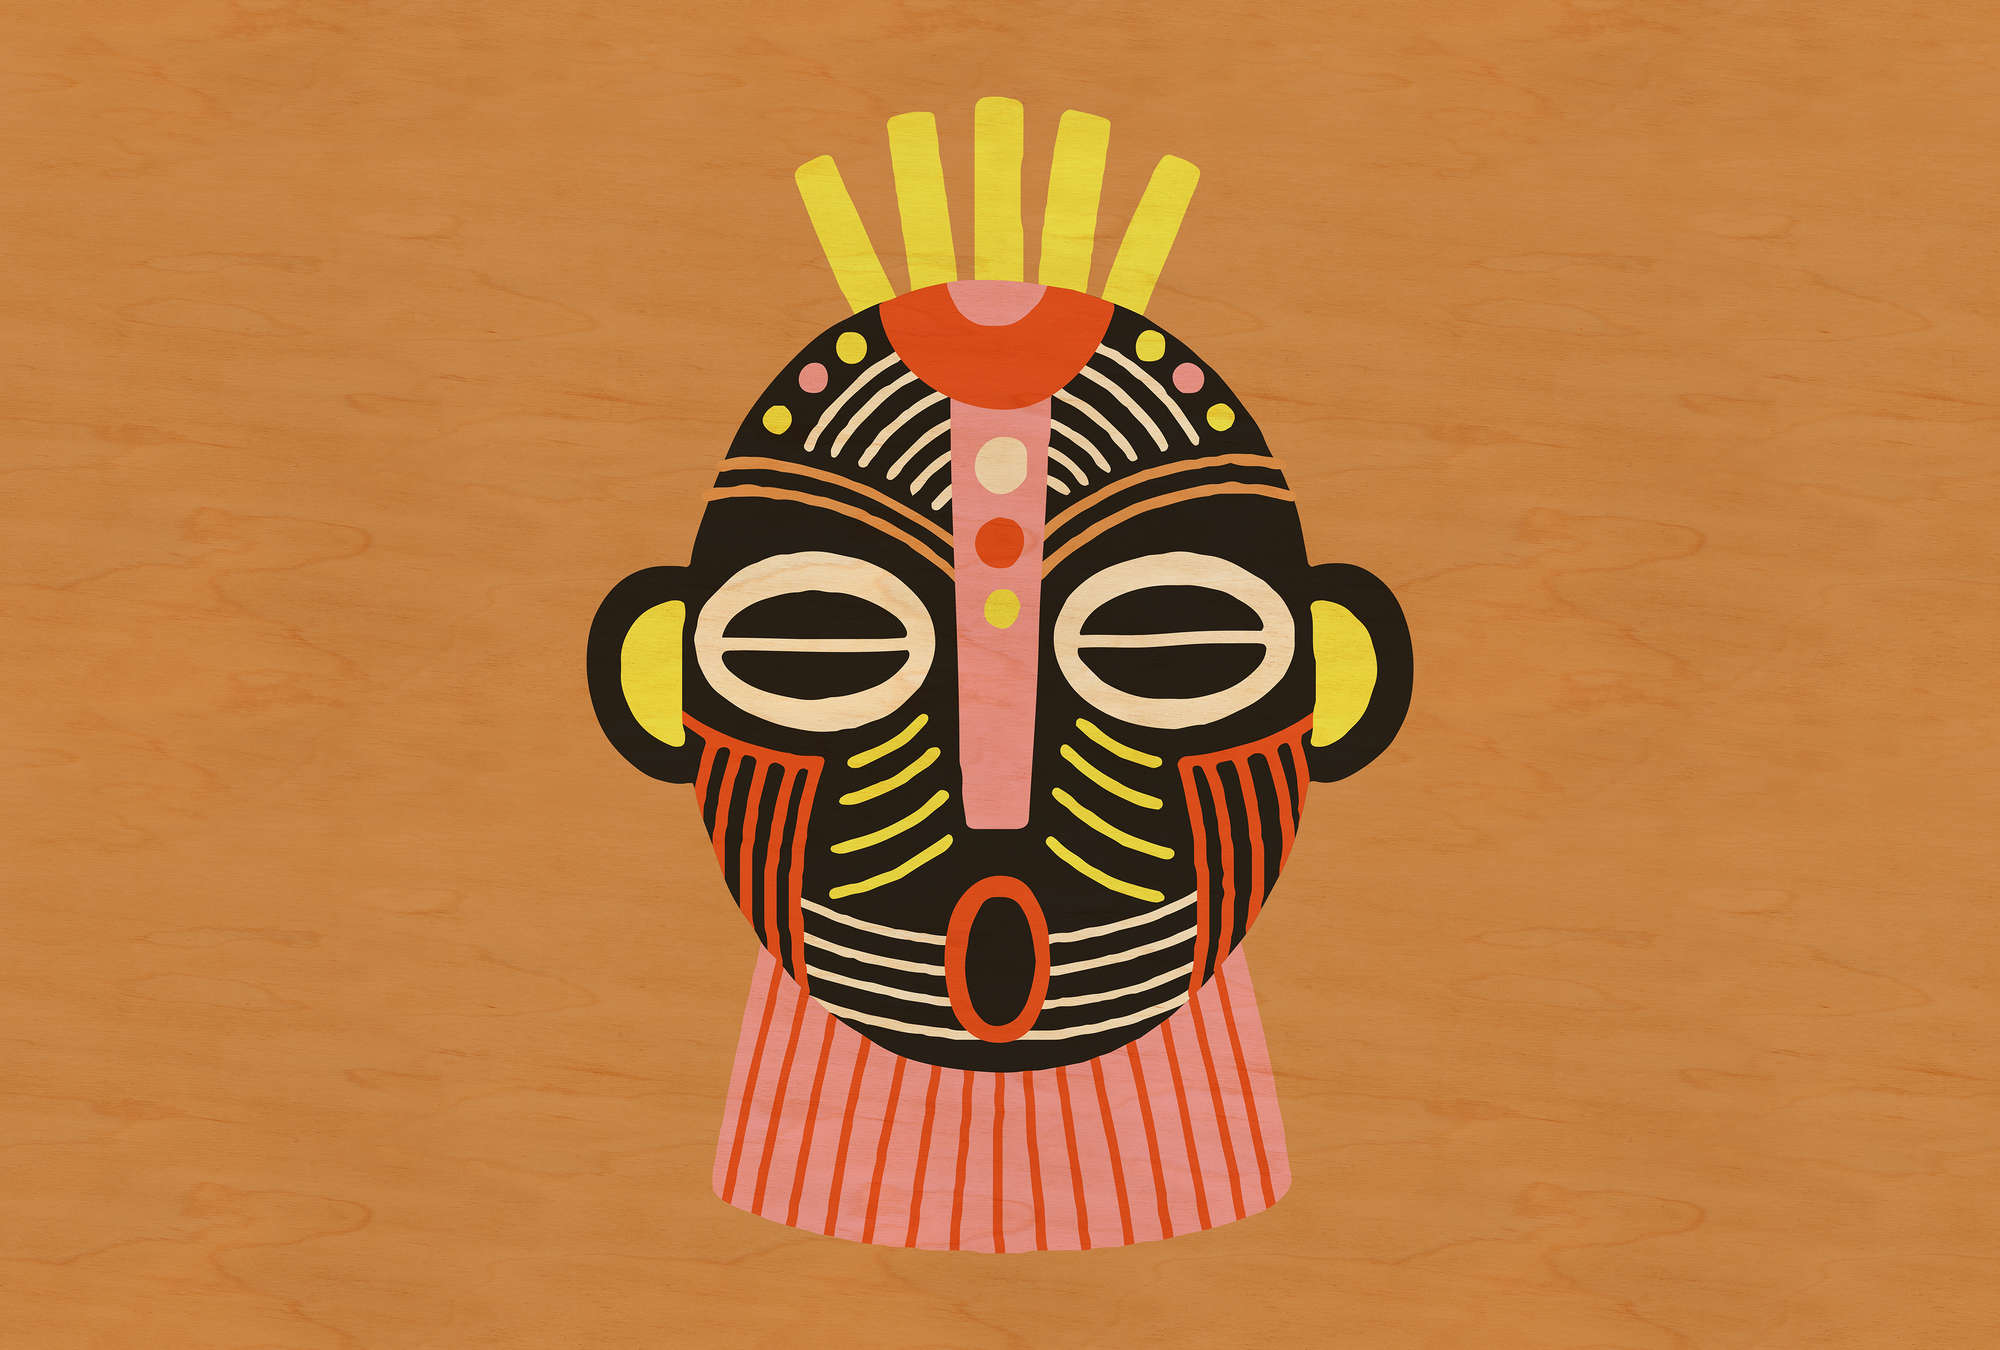             Overseas 4 – Fototapete Afrika Design Inspiration Maske
        